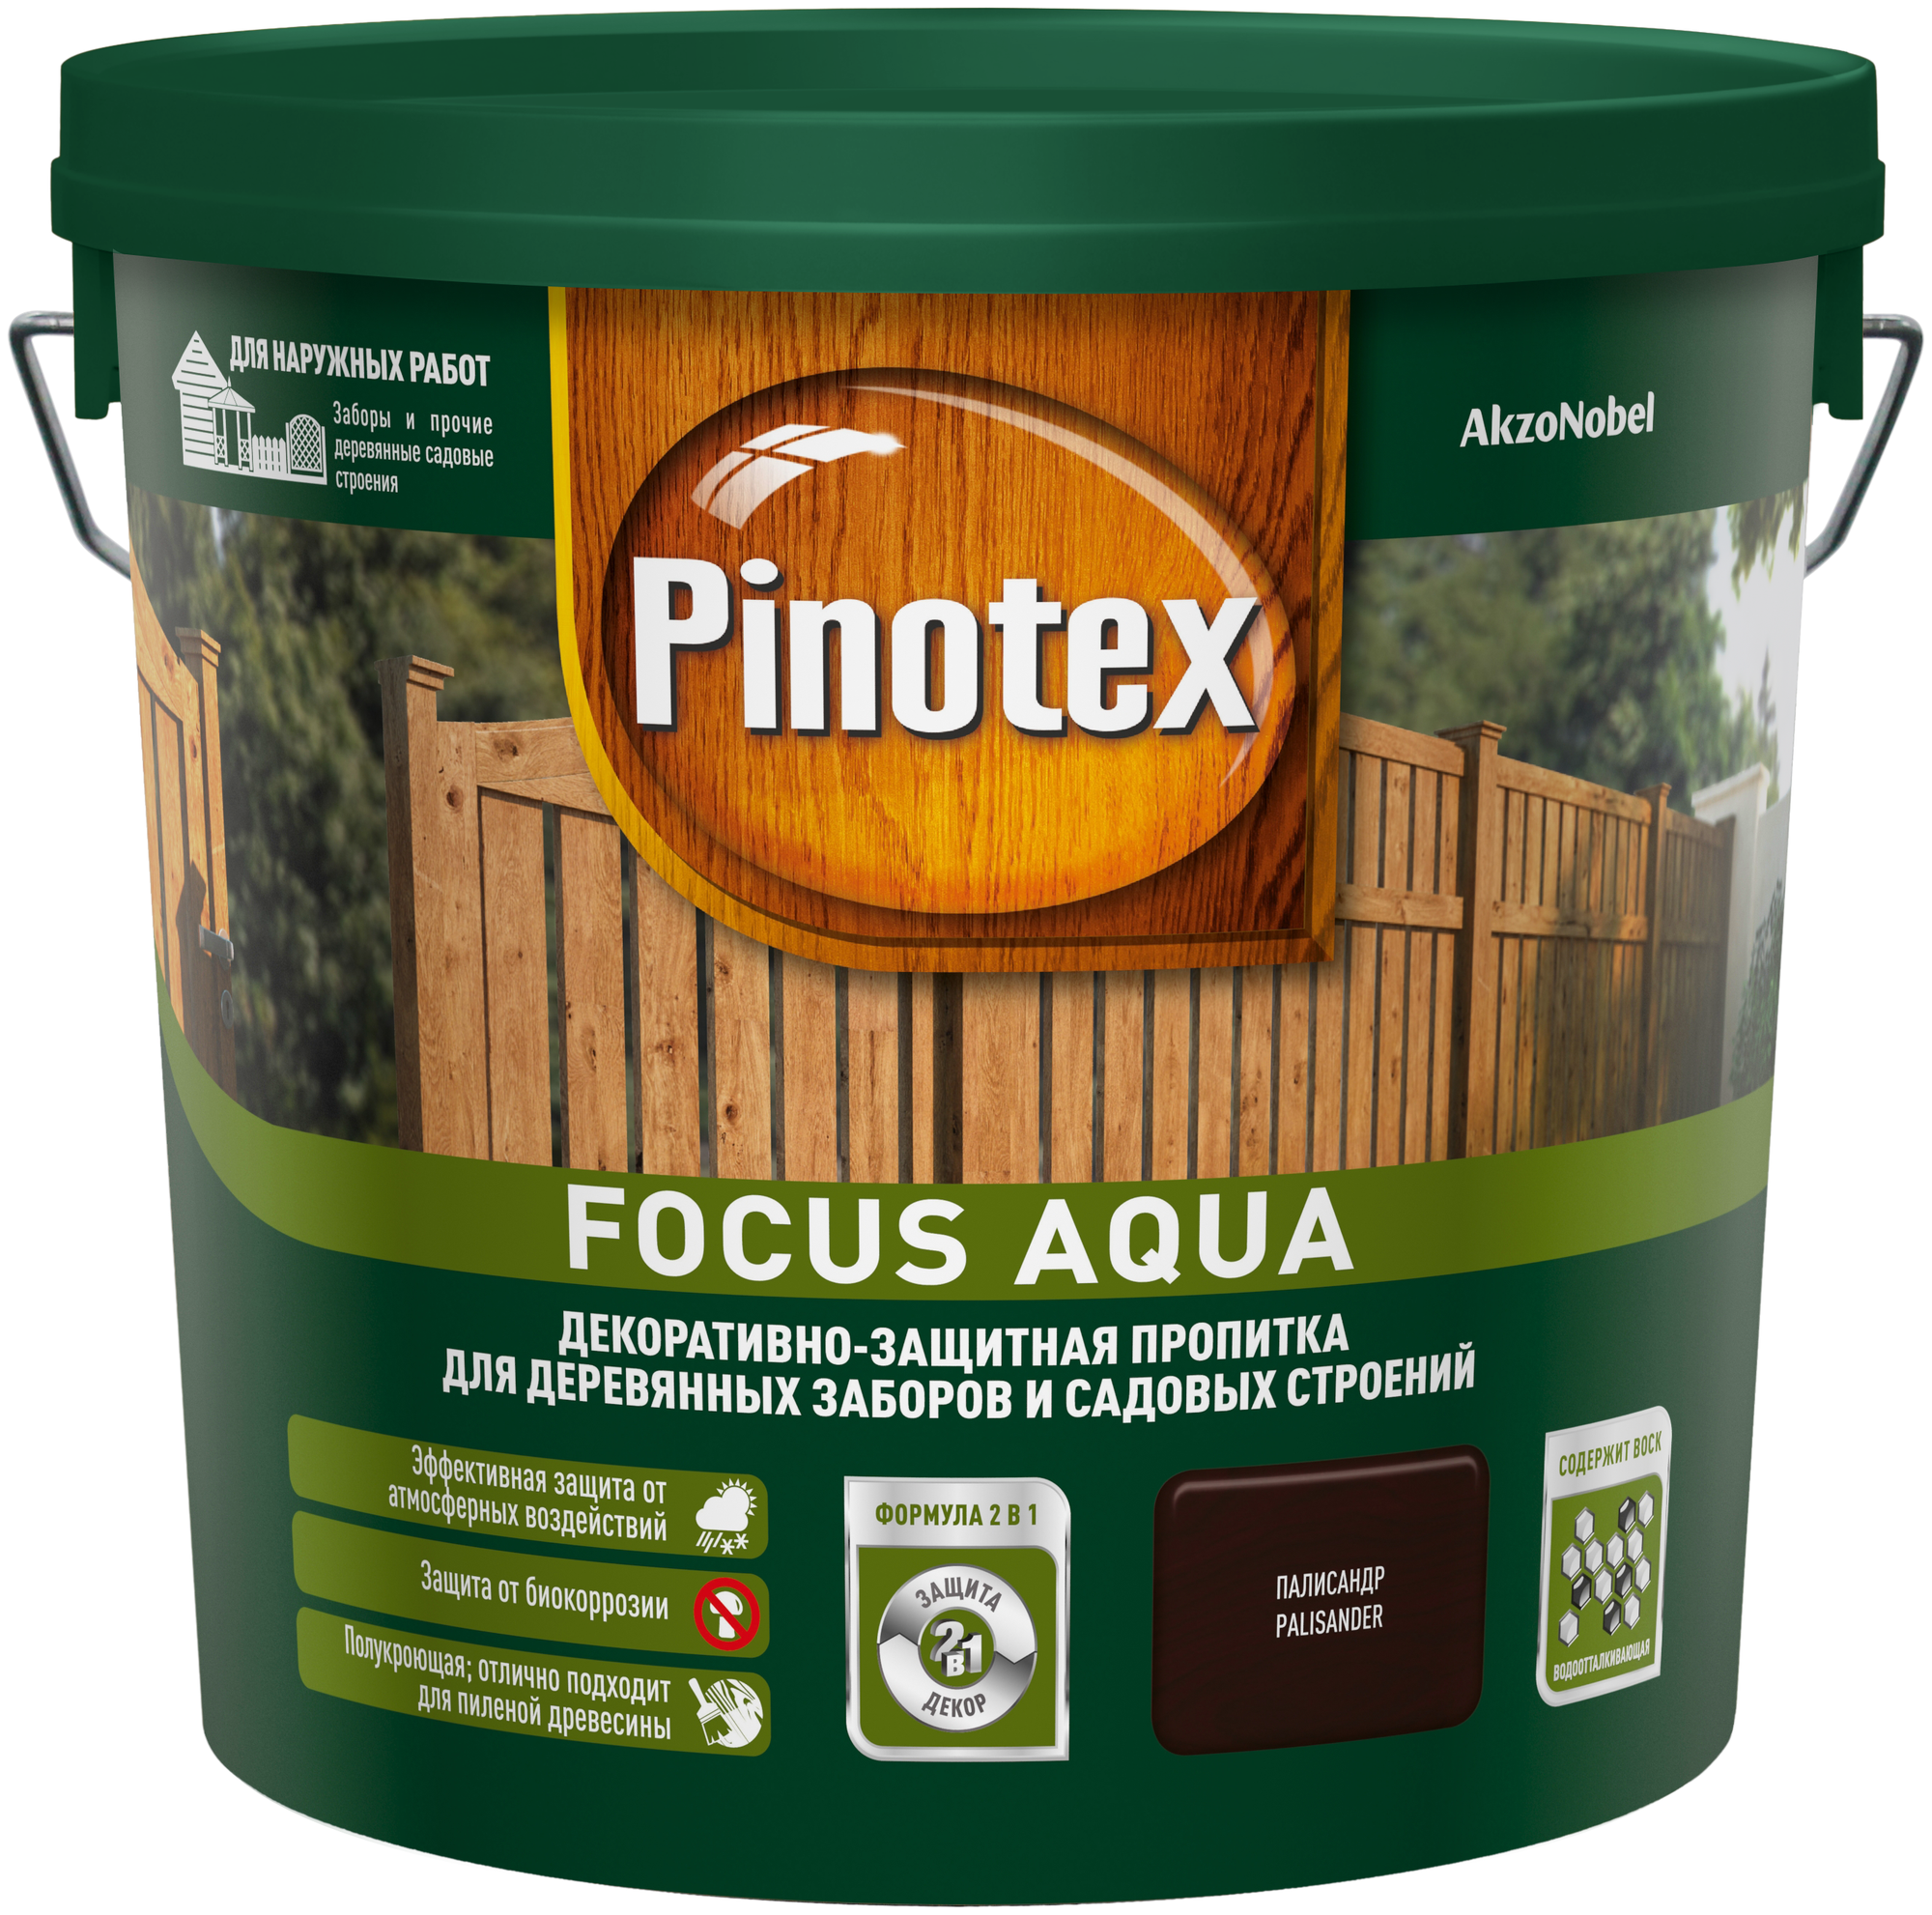      Pinotex Focus Aqua  5 .